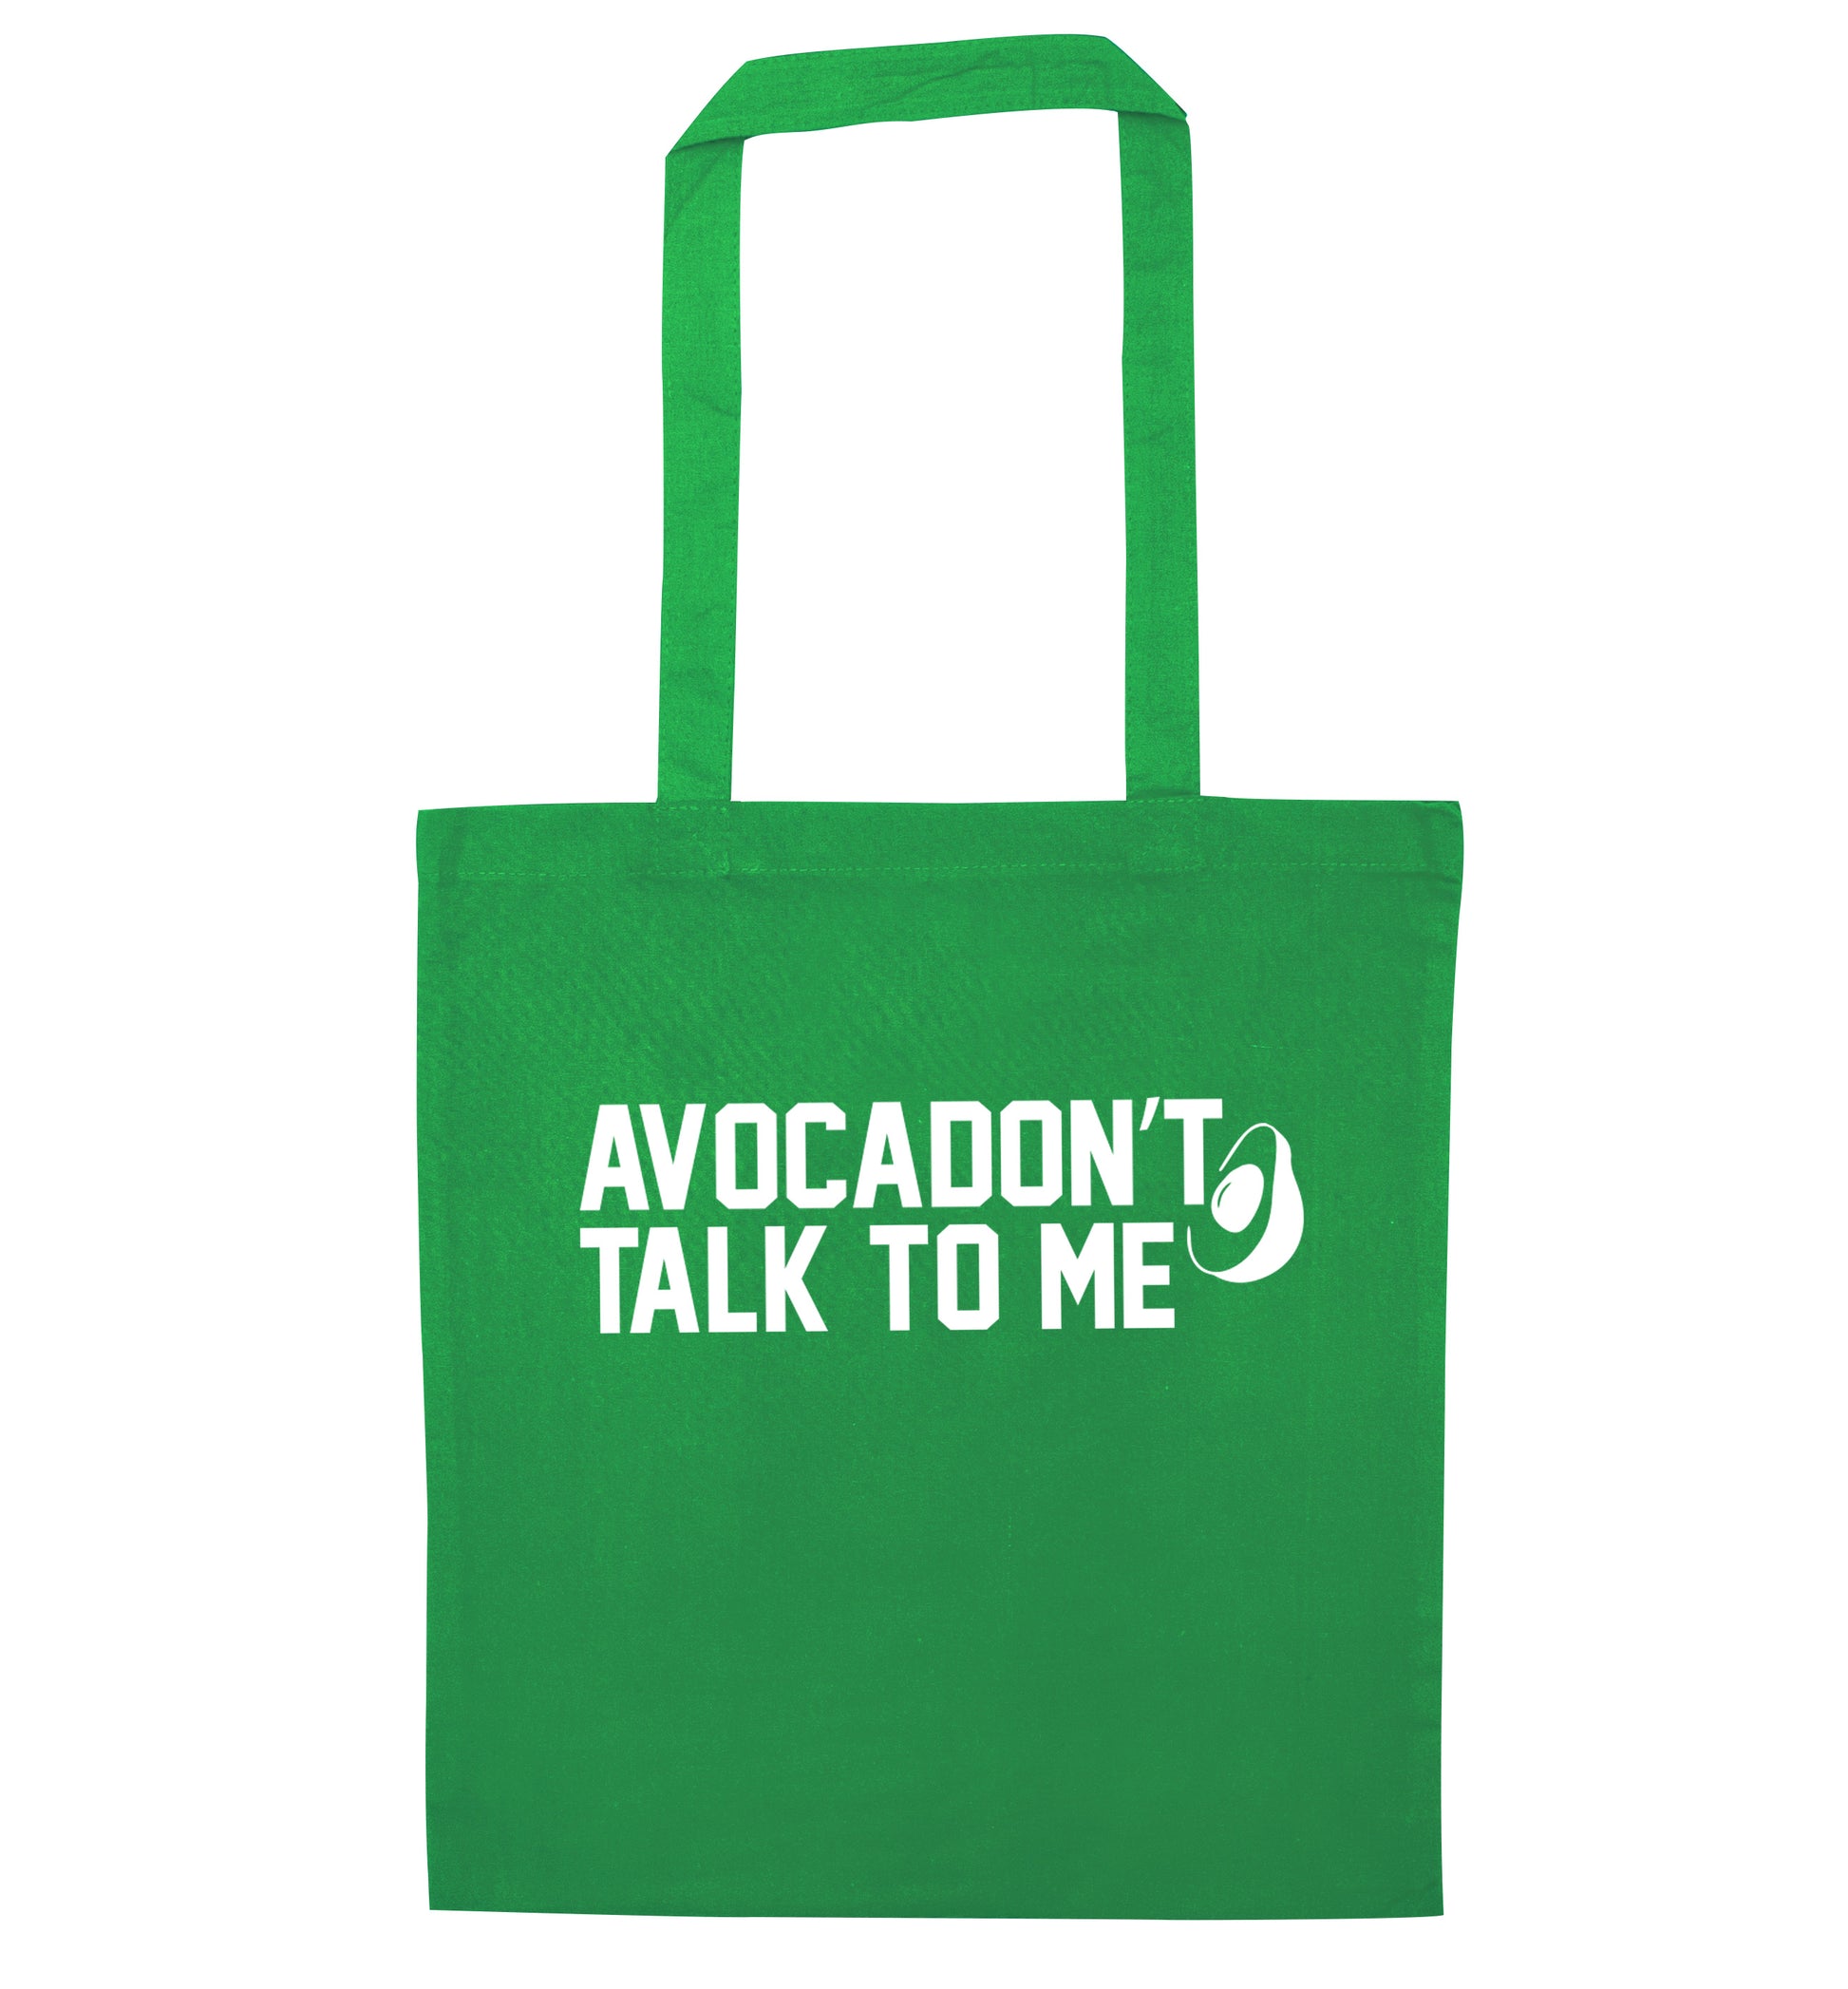 Avocadon't talk to me green tote bag